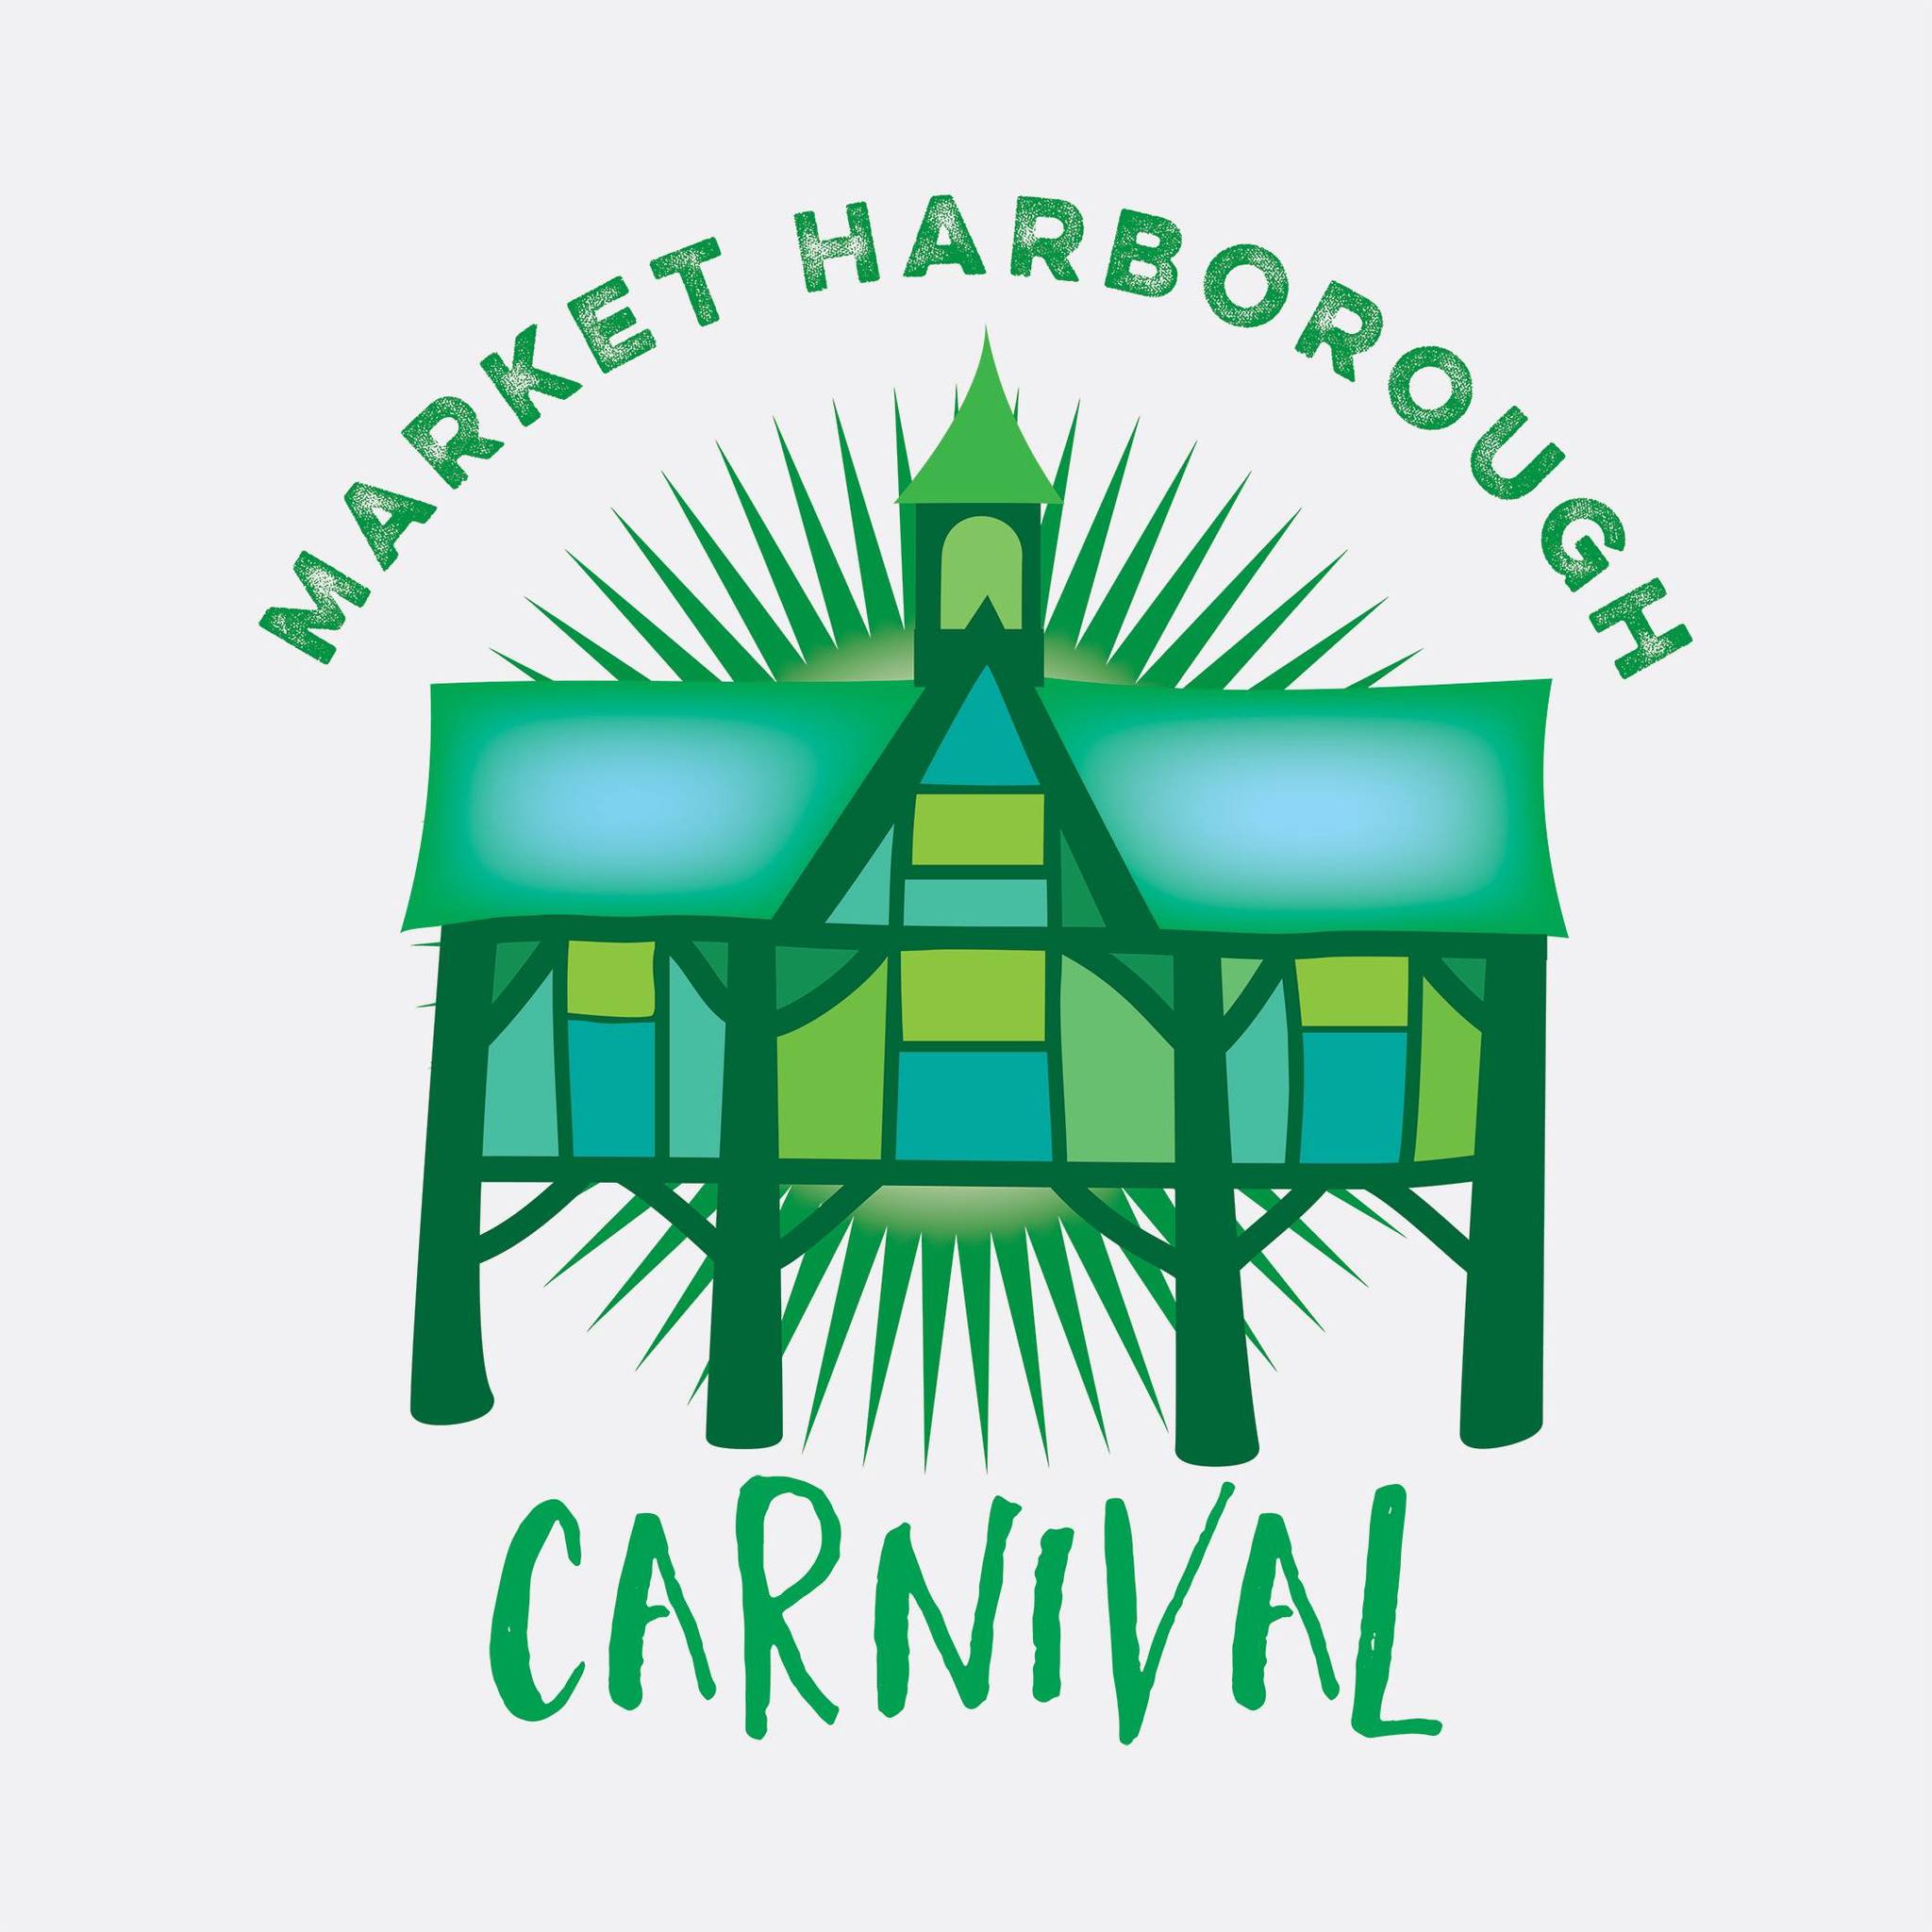 Market Harborough carnival 